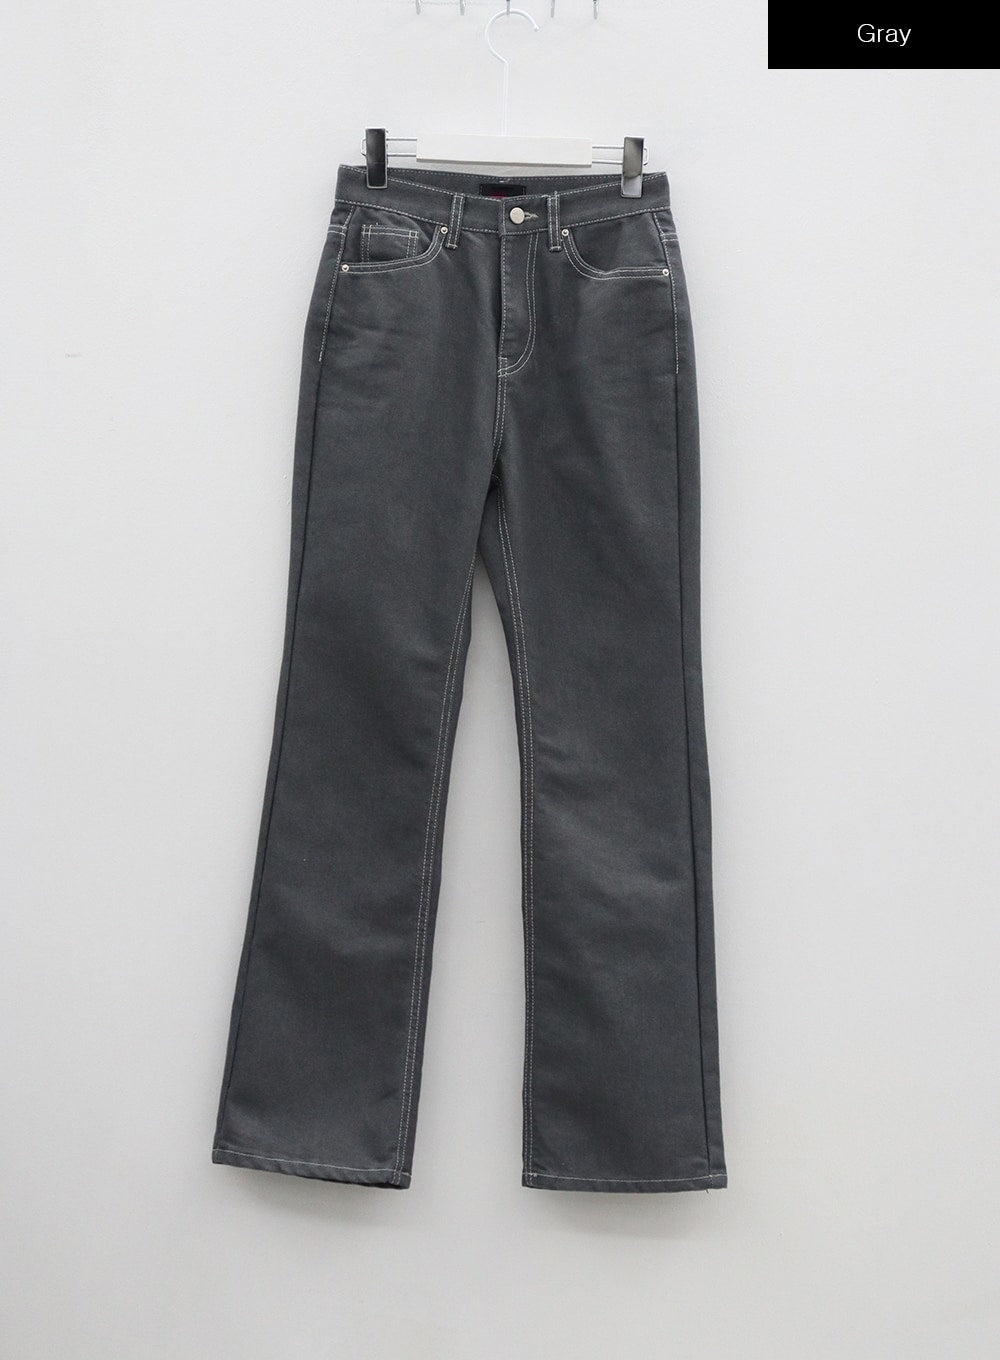 Stitch Detail Jeans BM317